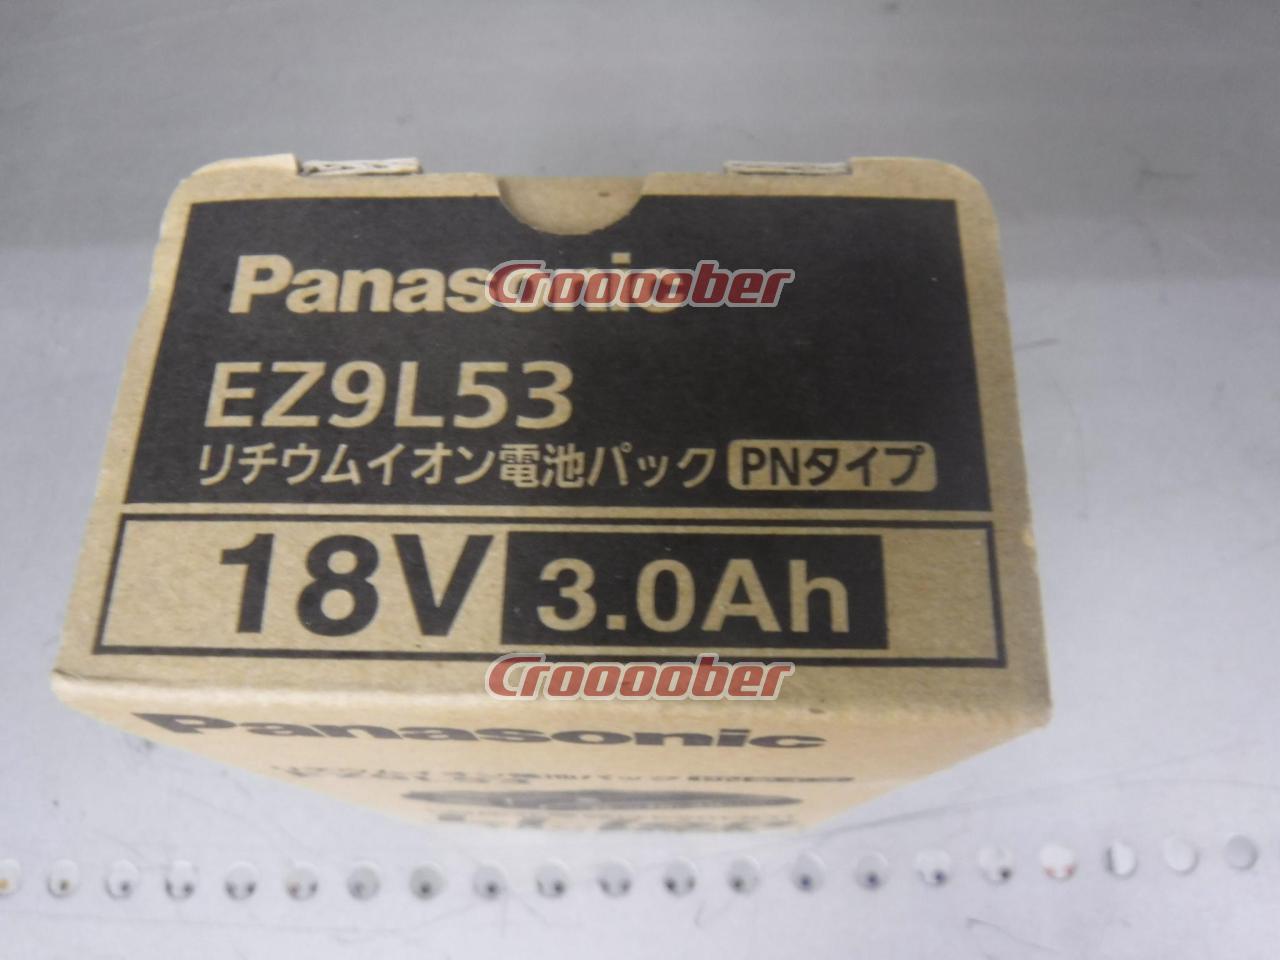 WG】パナソニック(Panasonic) 電池パック 18V 3.0Ah EZ9L53 | 電動工具